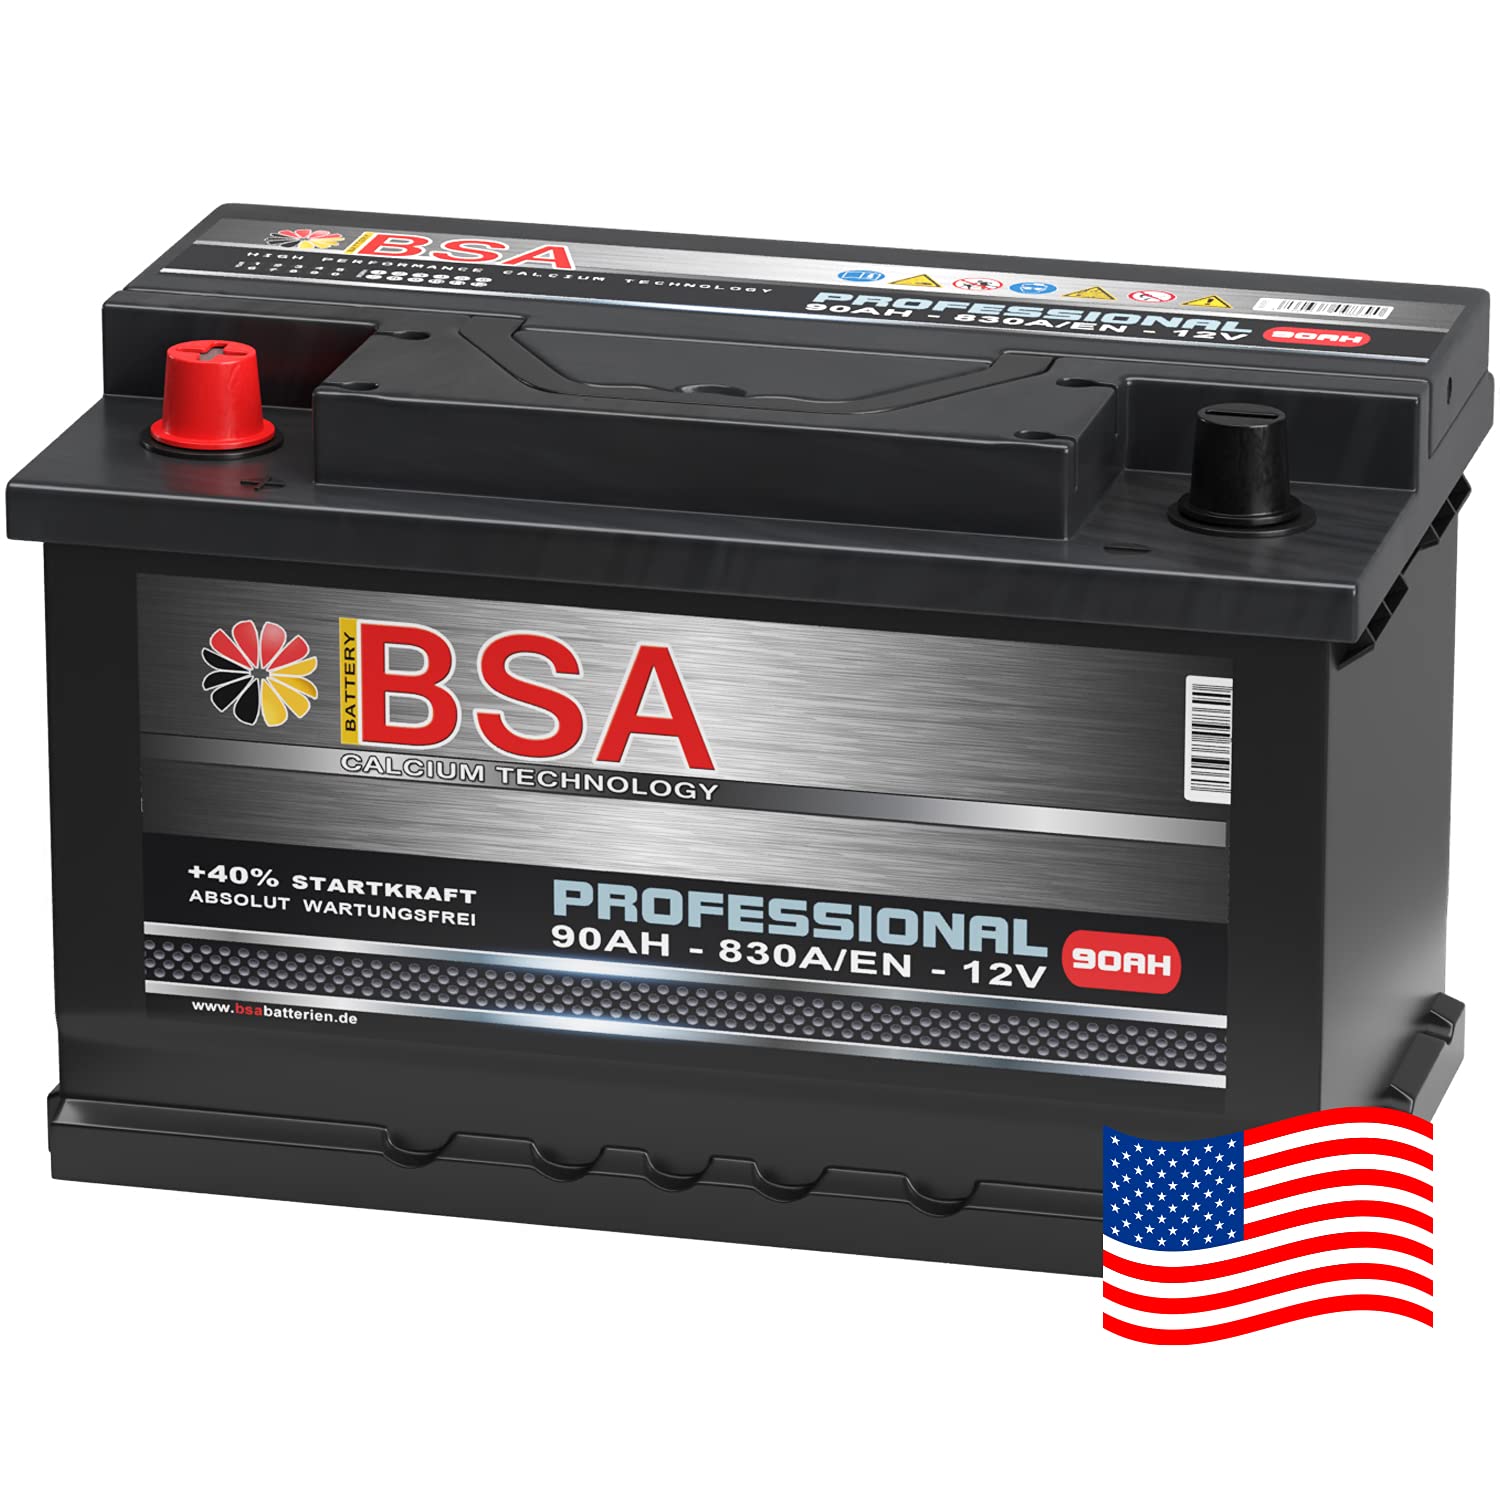 US Autobatterie 90Ah 830A/EN USA Batterie Pluspol Links Antara Captiva 59095